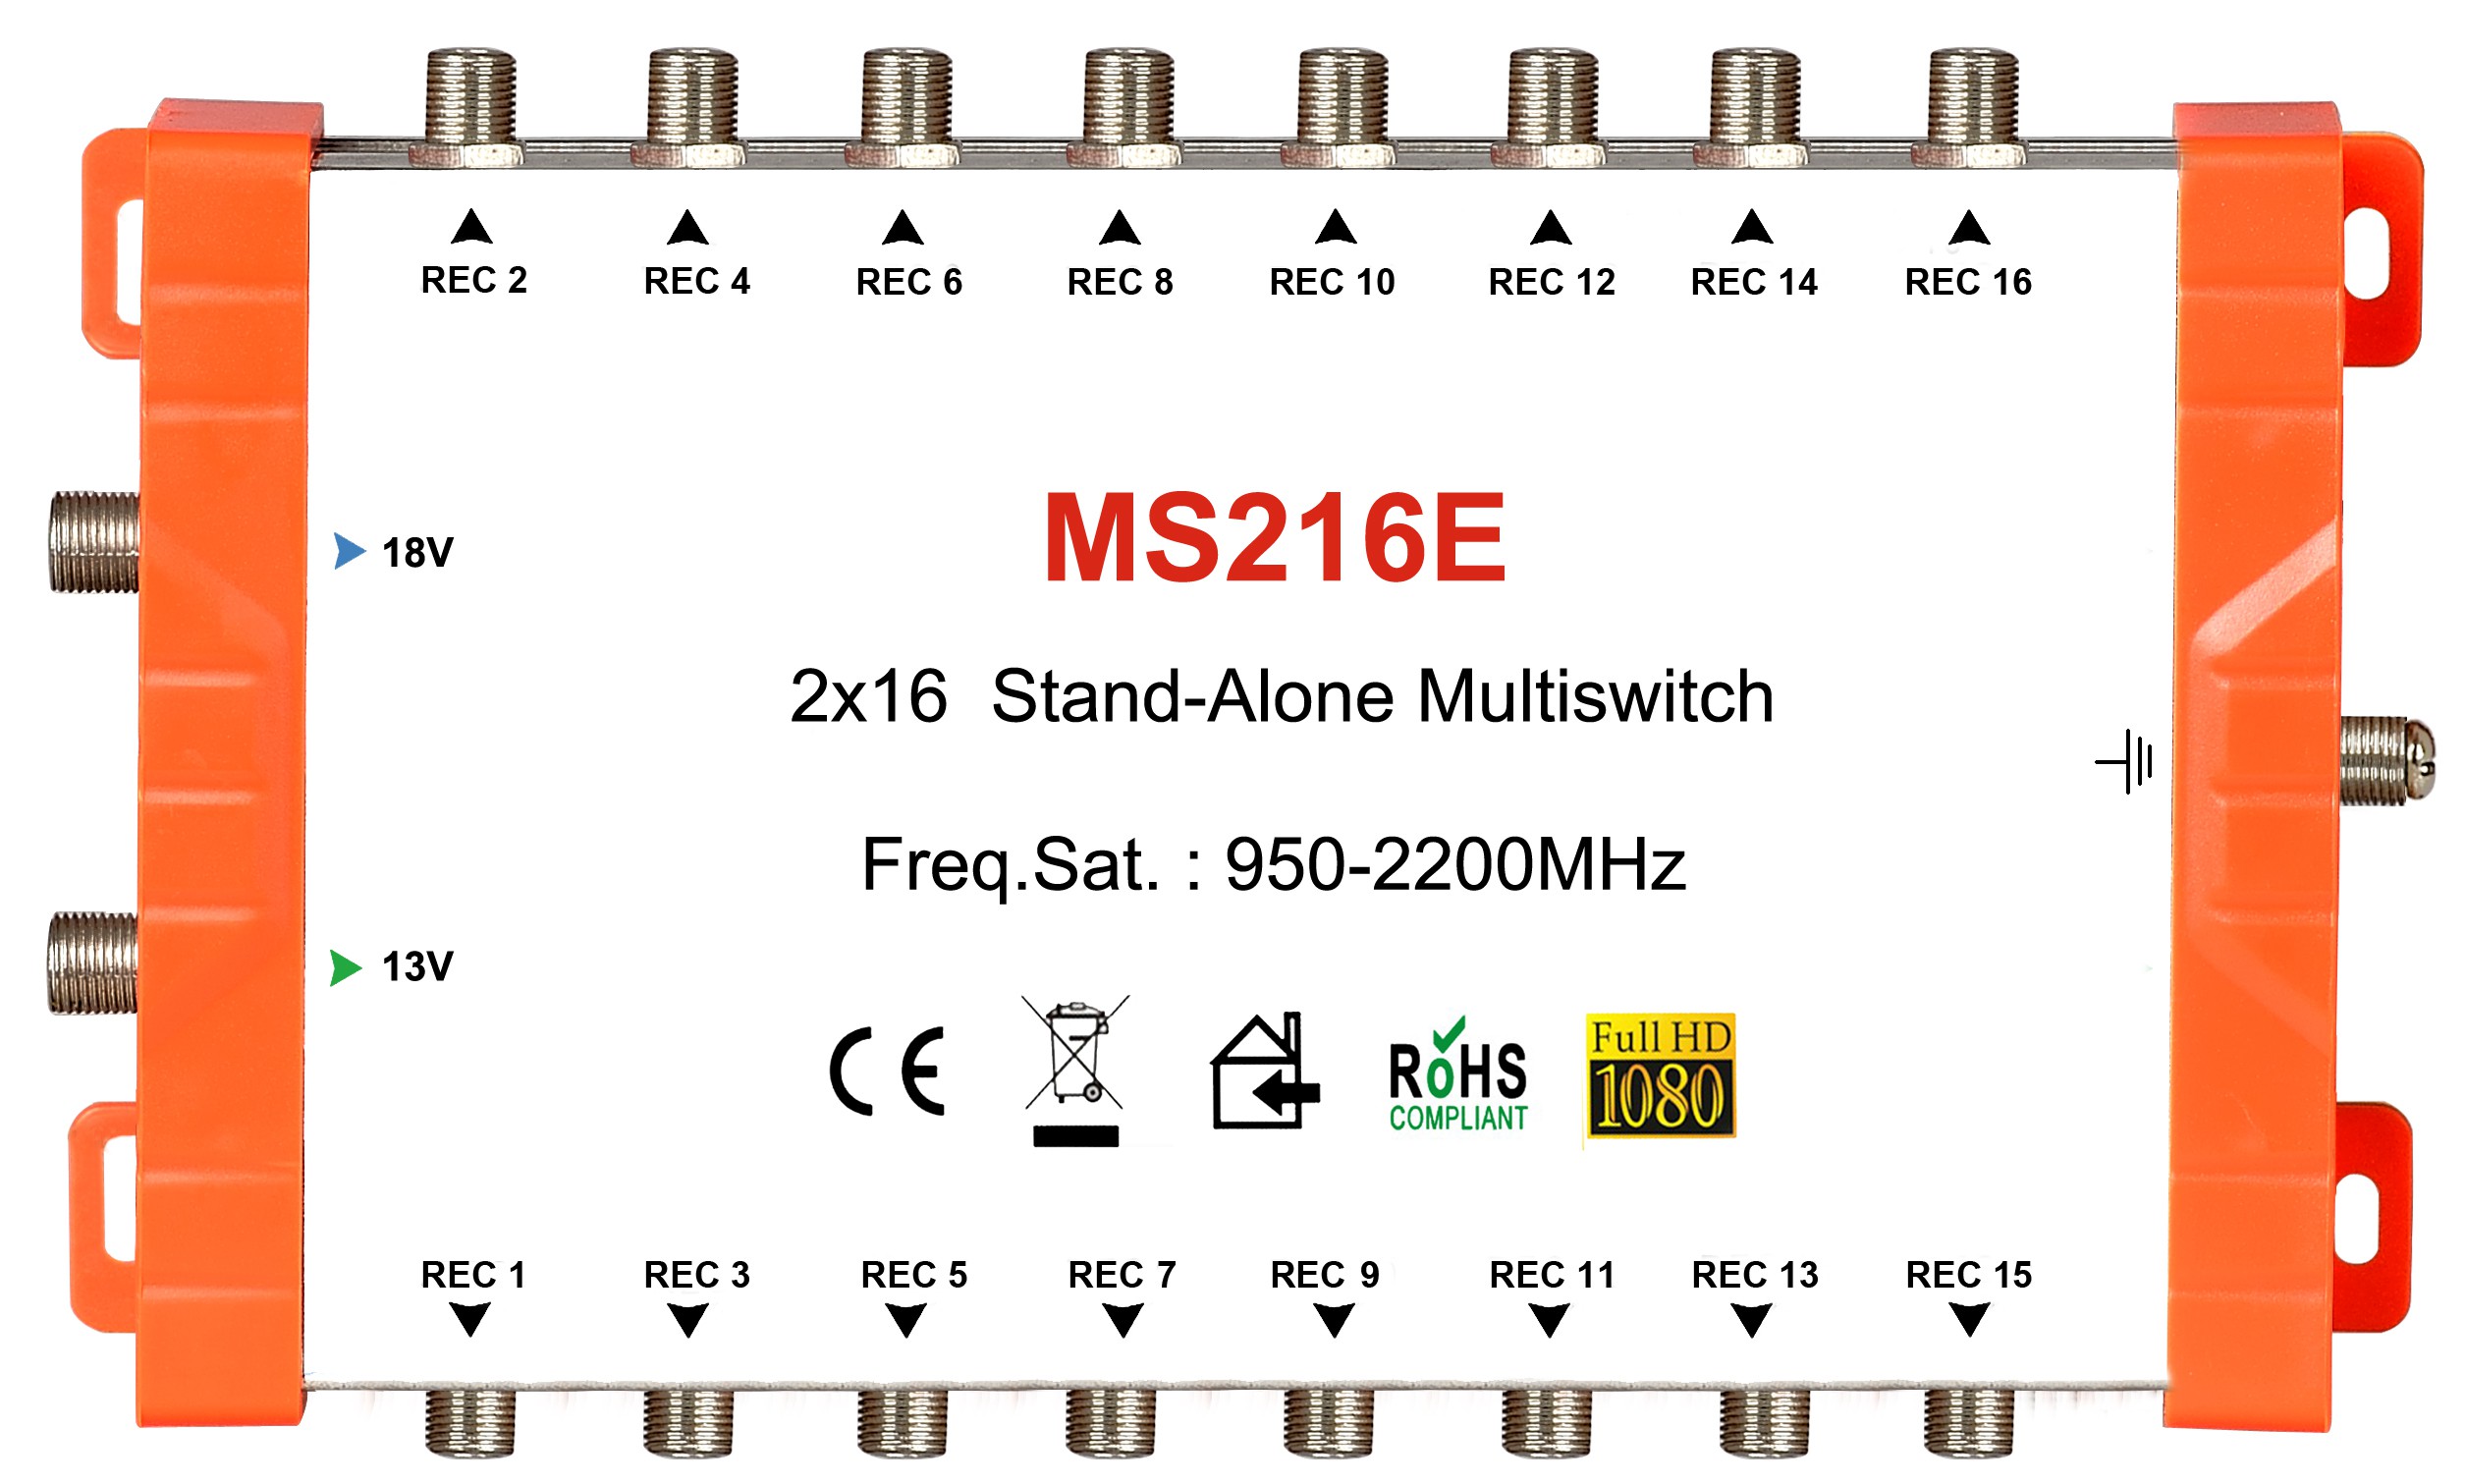 2x16 satellite multi-switch, Stand-Alone multiswitch